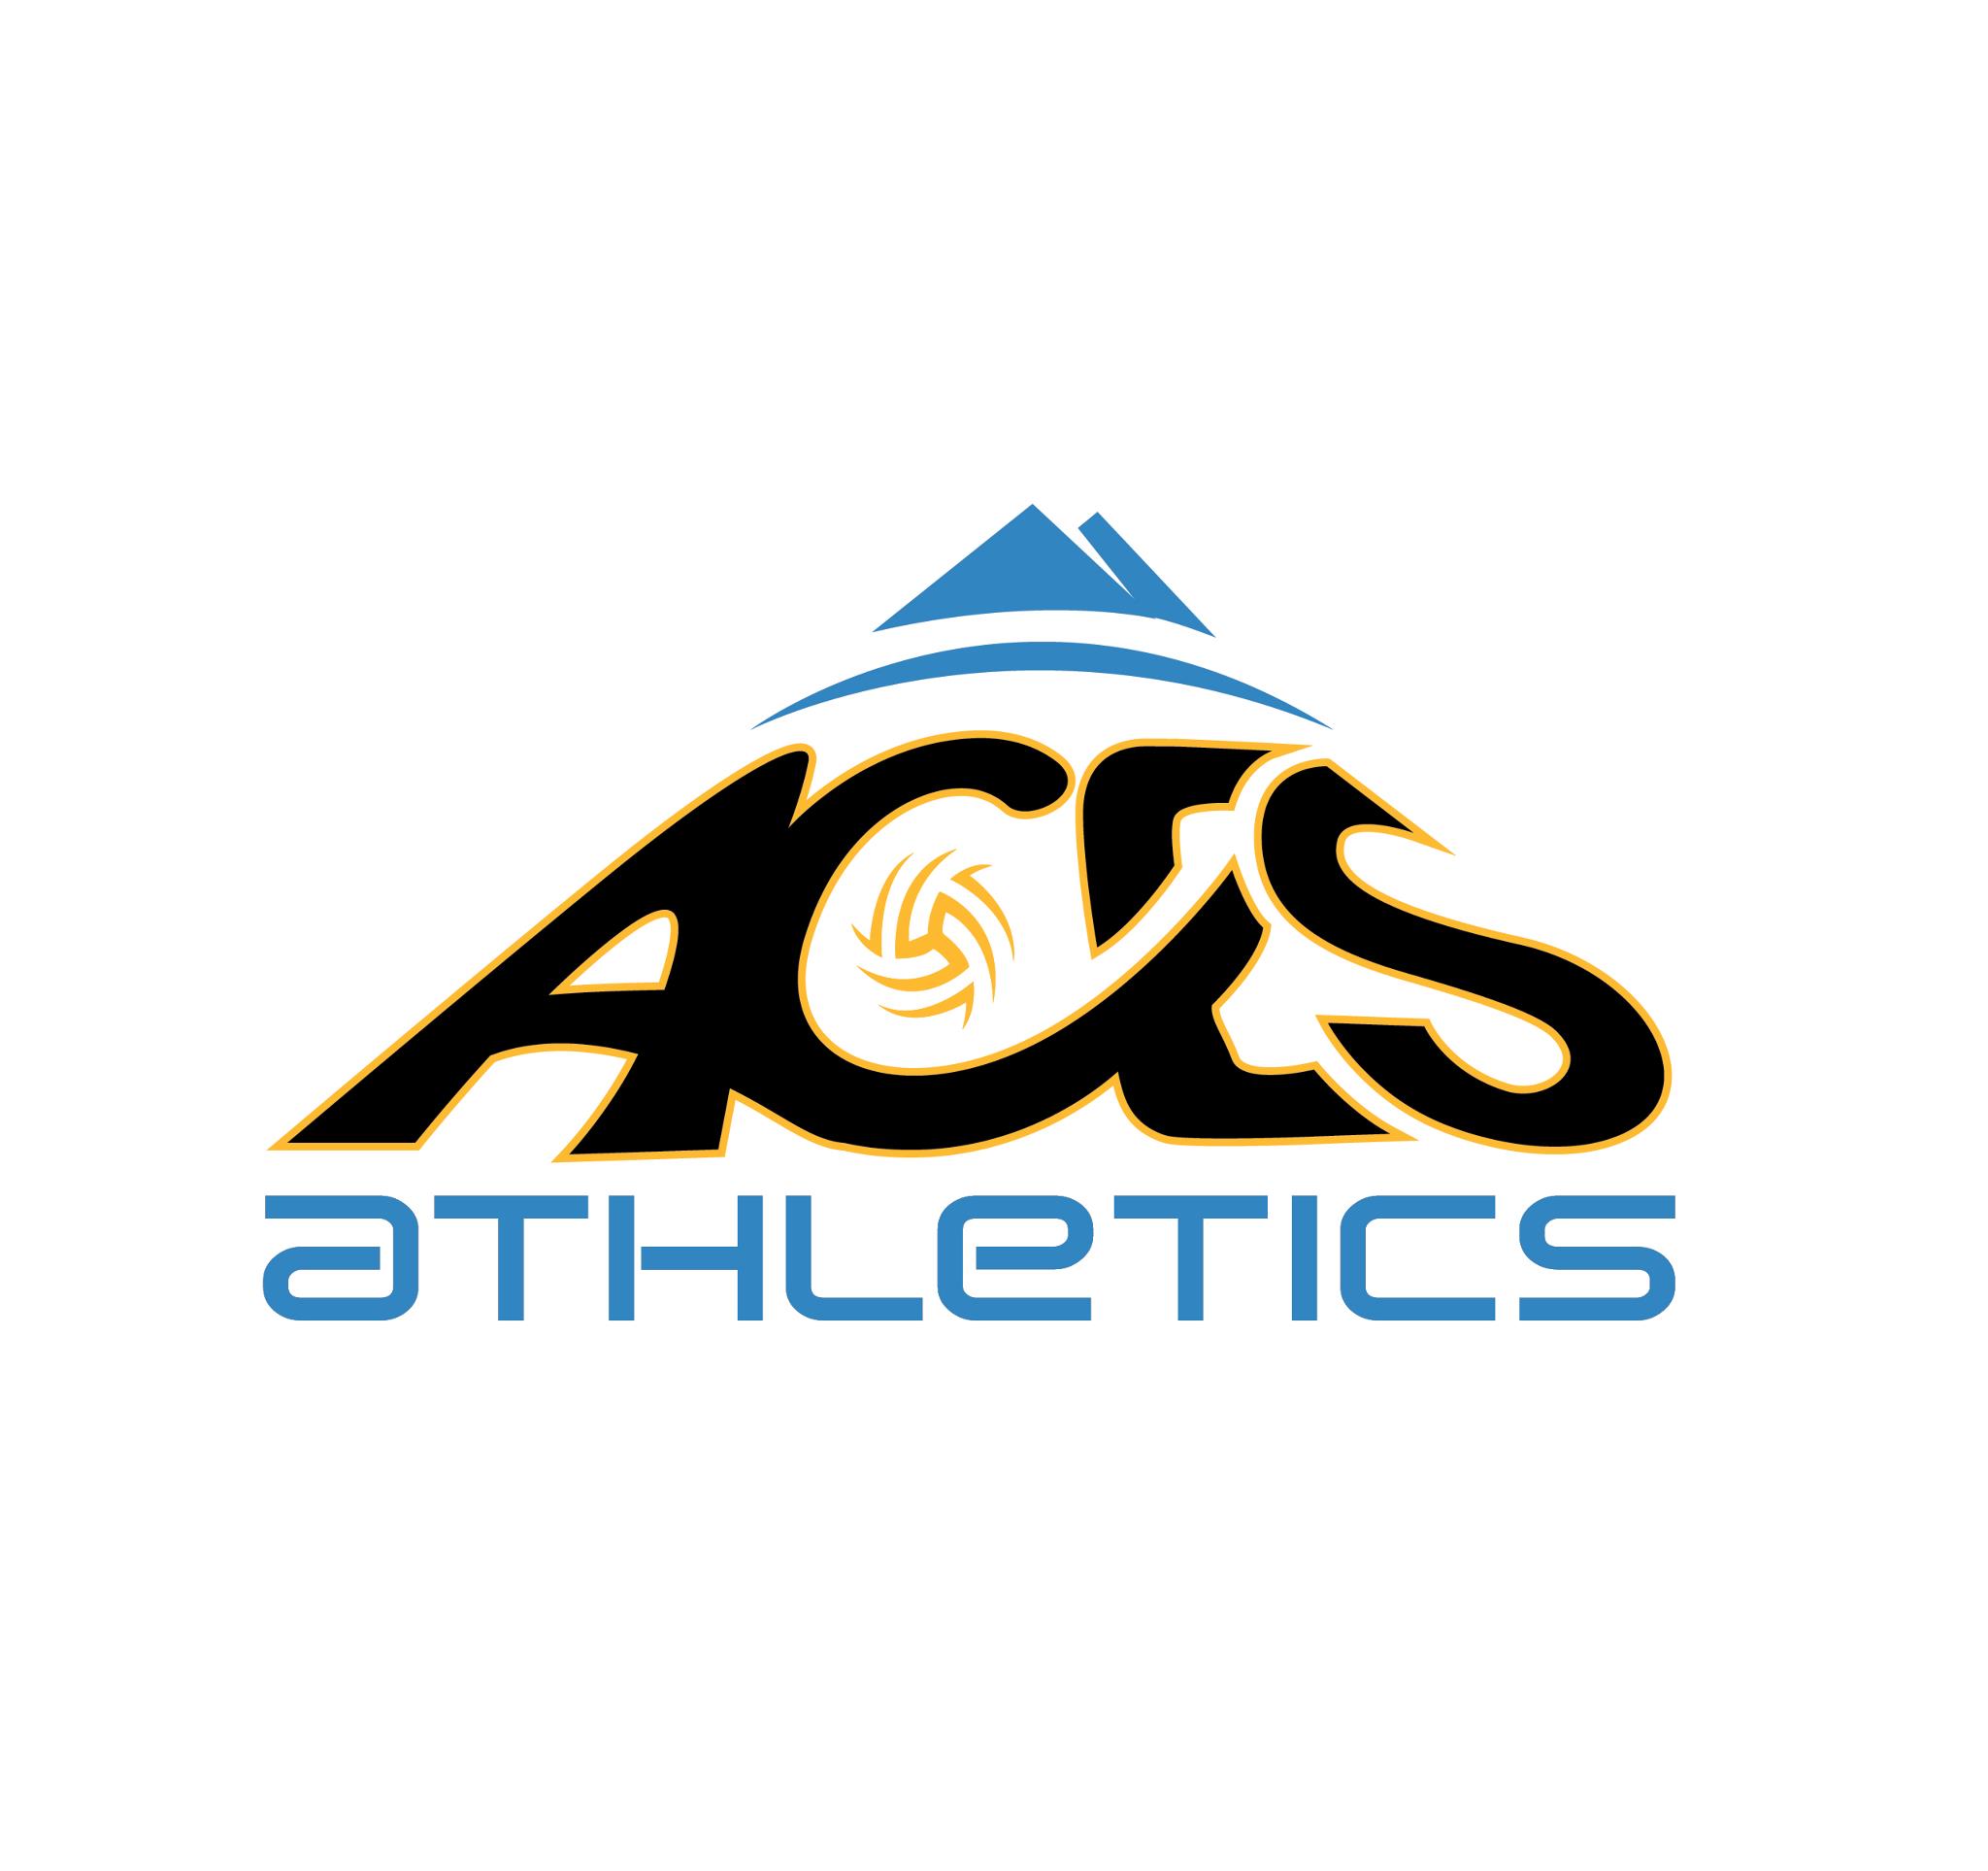 Grand Opening of Aces Athletics in Lehi, Utah to be held this Saturday ...